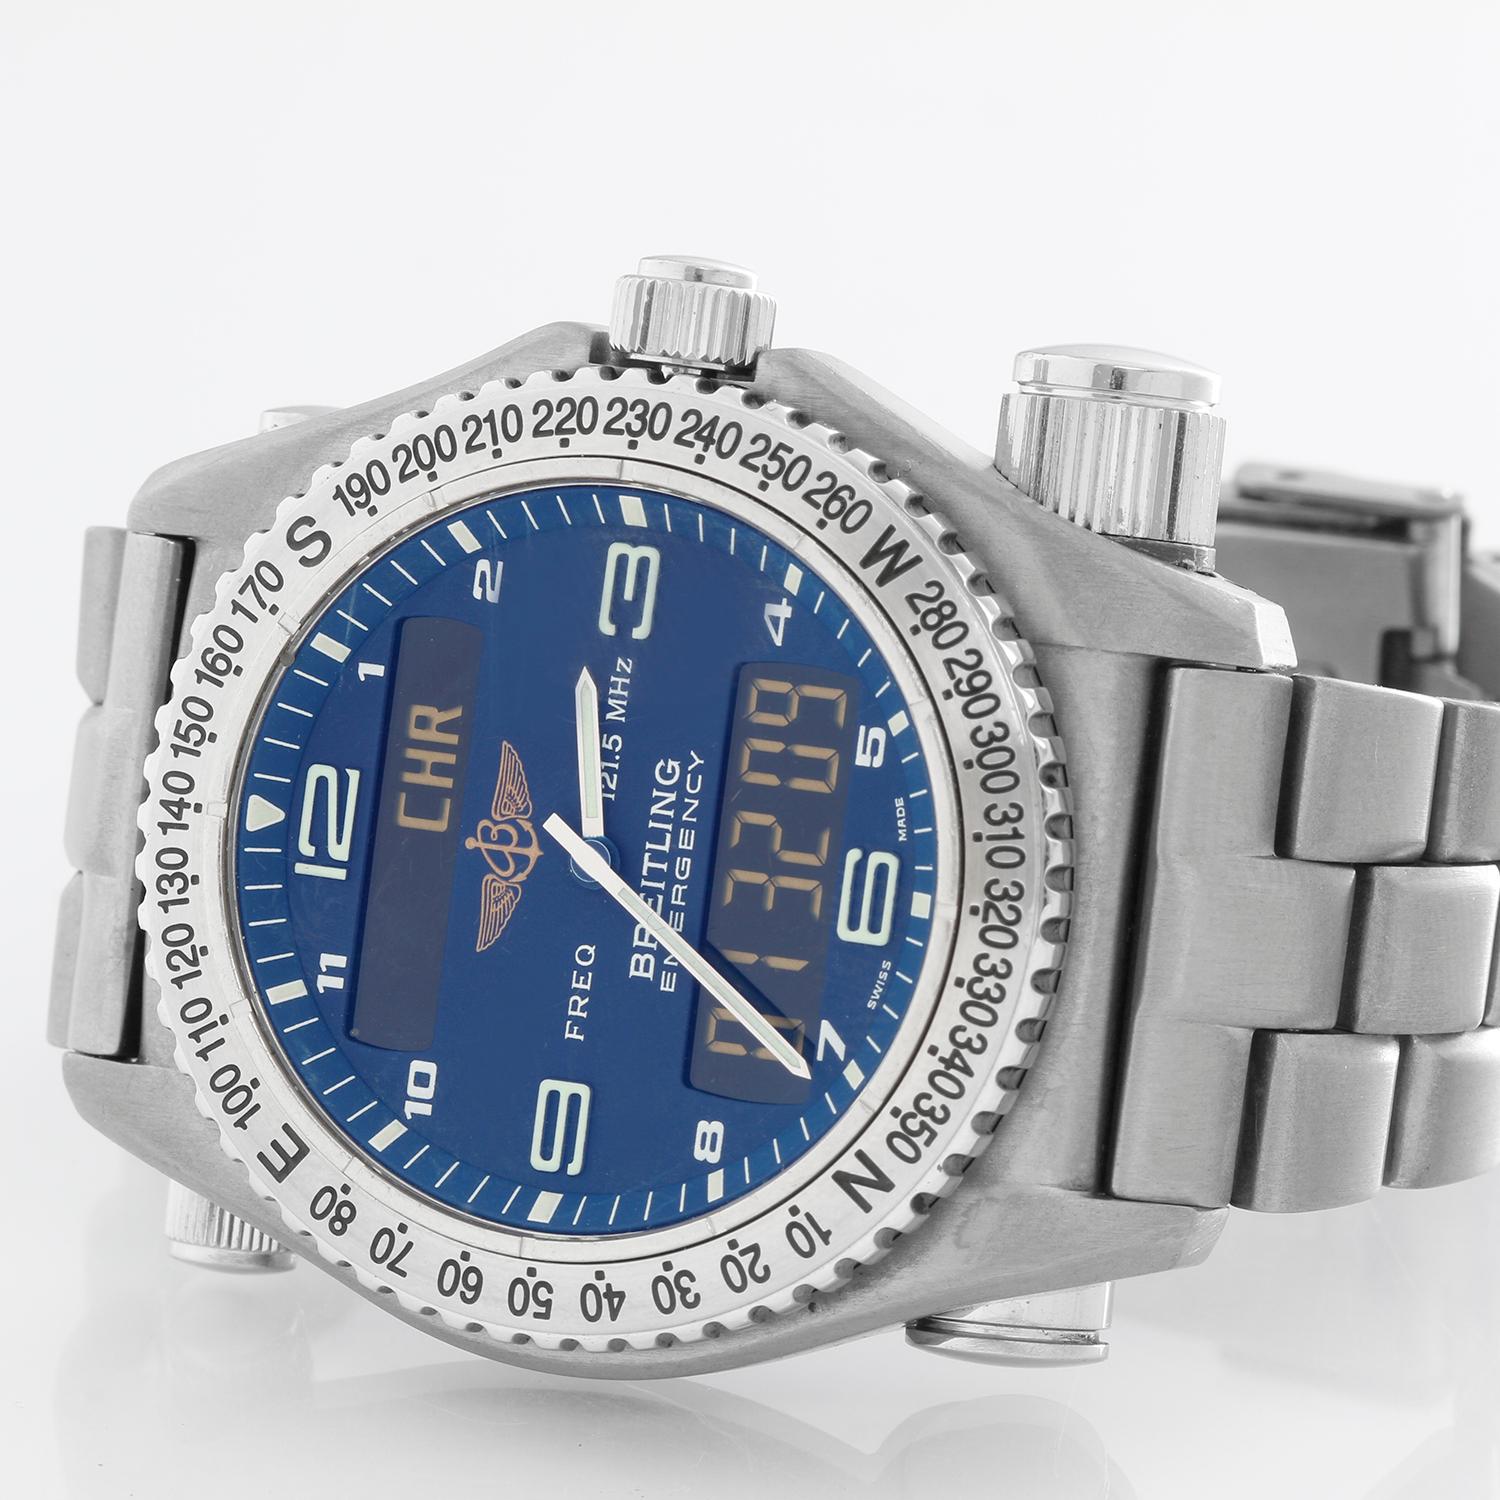 Breitling Emergency Men's Titanium Watch E56121.1 - Quartz. Titanium case with rotating bezel ( 42 .5 mm ) . Blue dial with Blue Angels shield logo; hours, minutes, date, chronograph, LCD, multifunction. Titanium bracelet with deployant clasp.